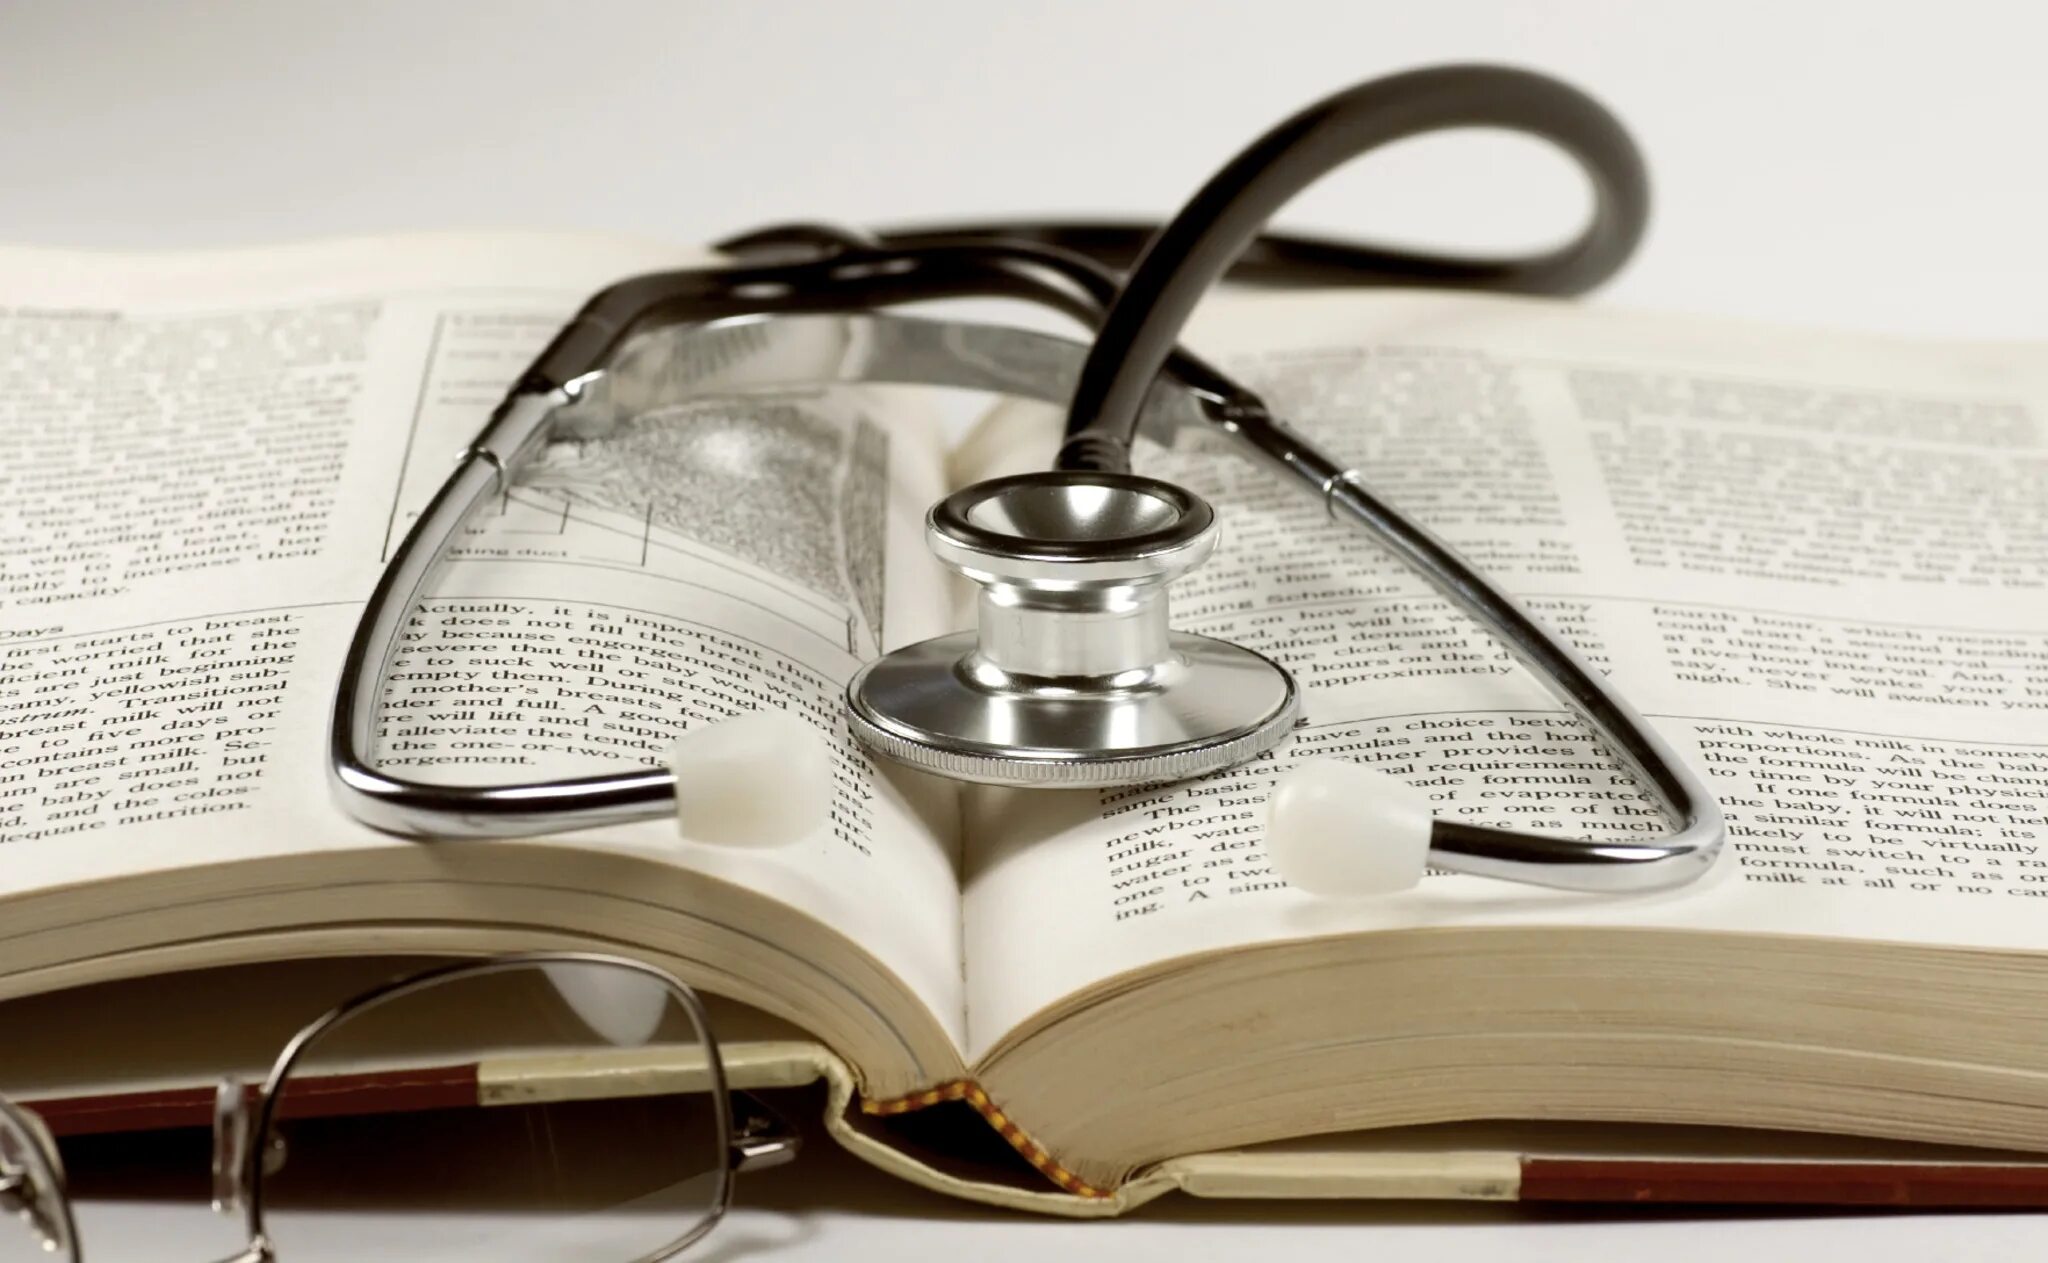 Медицинская литература. Медицинские книги. Научная литература медицинские книги. Стопка книг по медицине.